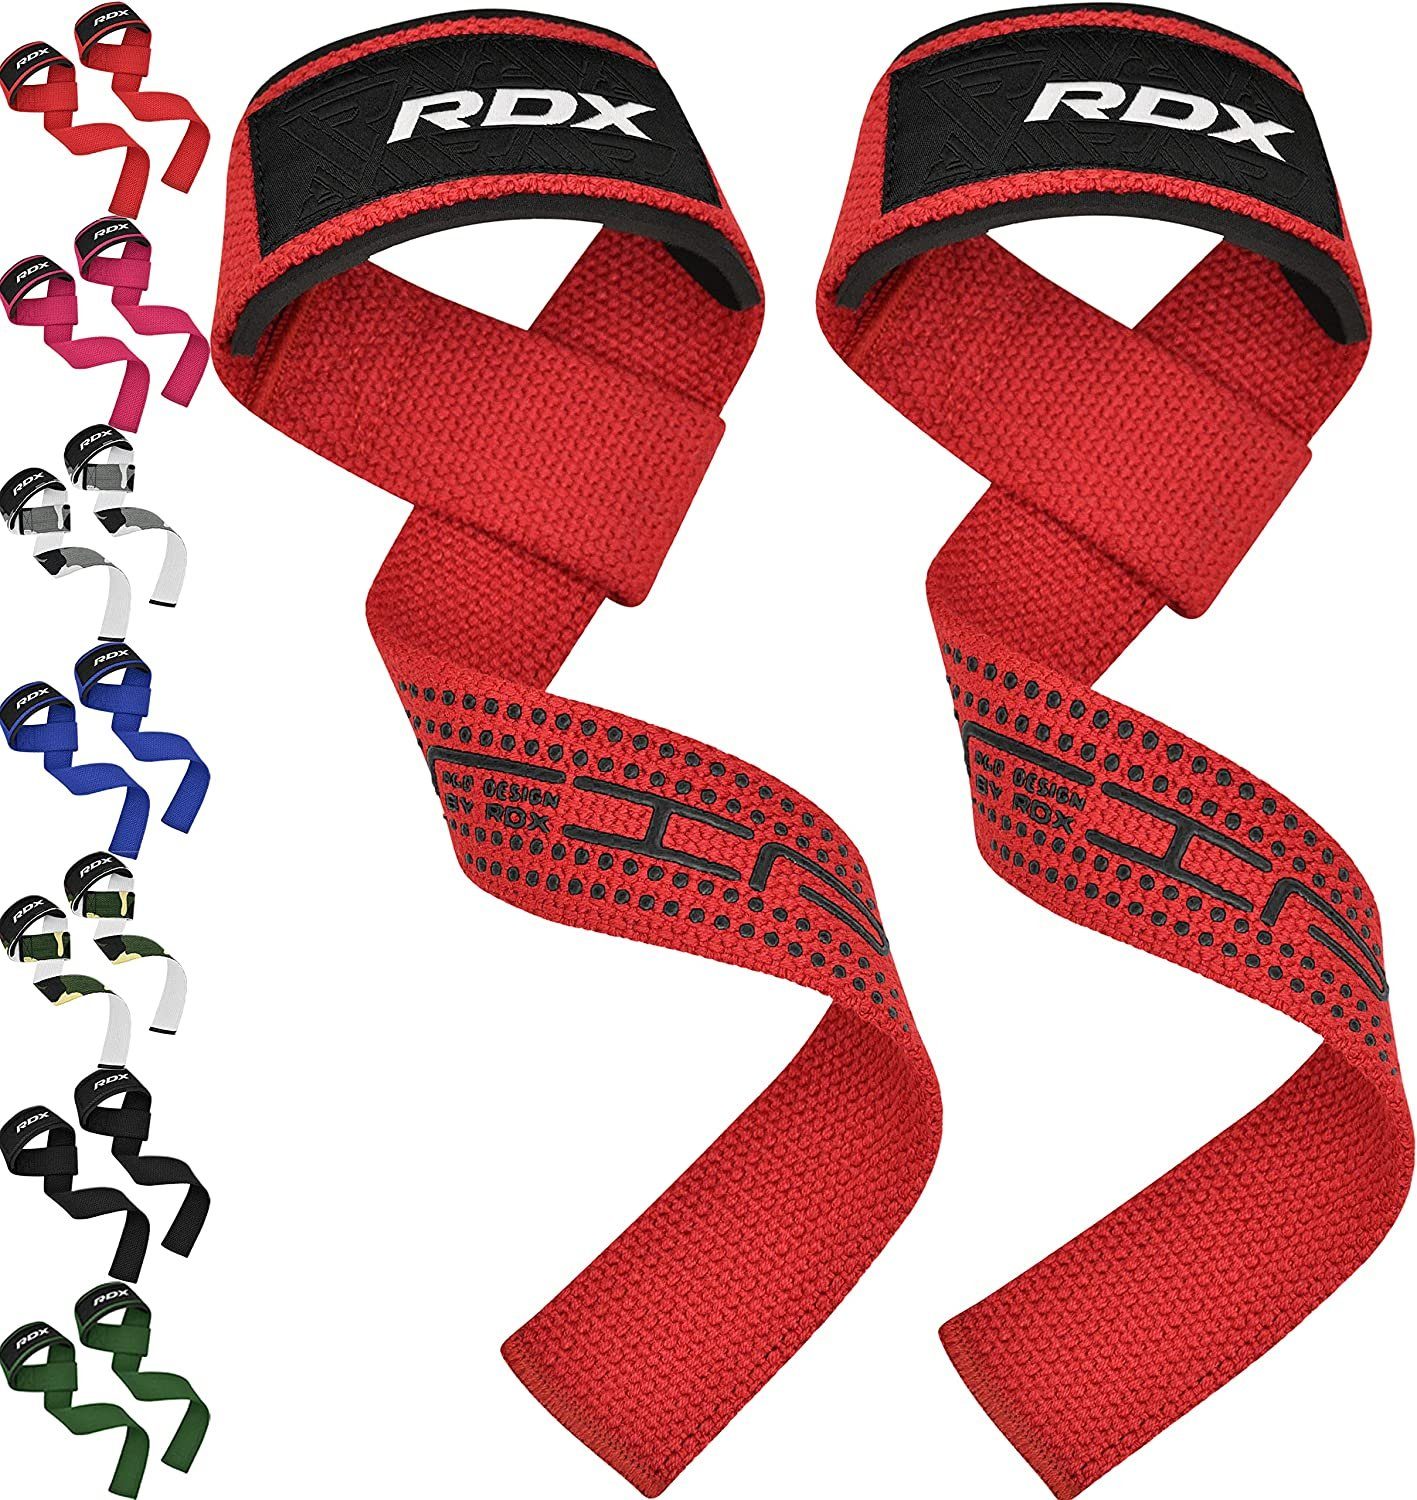 RDX Handgelenkschutz RDX Lifting Straps Strength Training, 60 cm lange professionelle Red Dotted